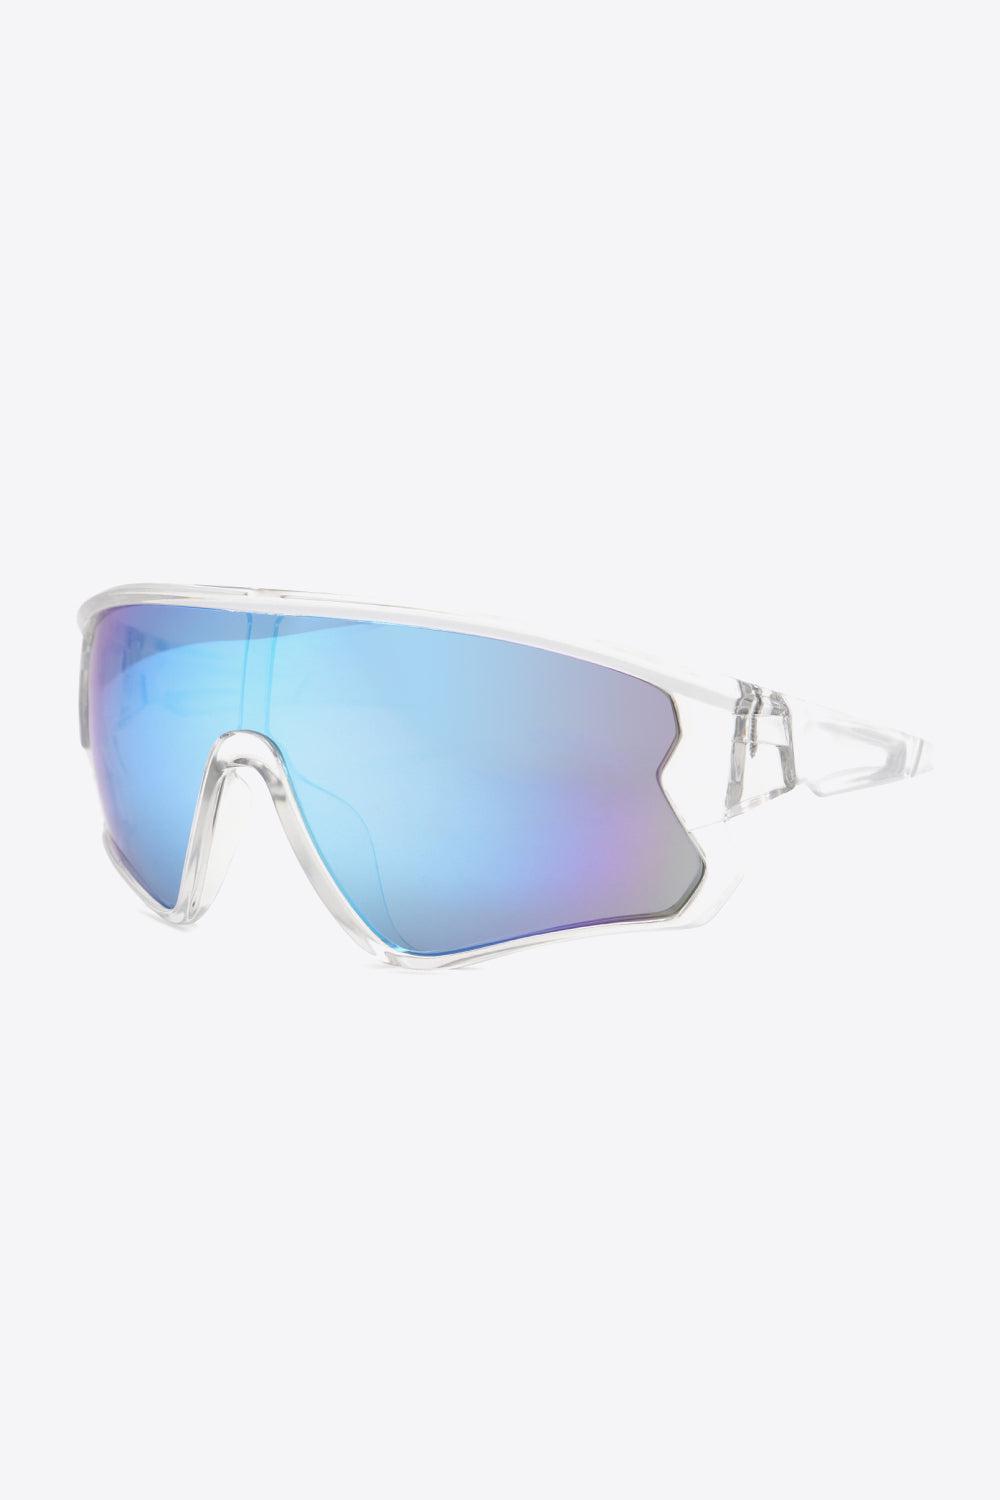 Polycarbonate Shield Sunglasses BLUE ZONE PLANET